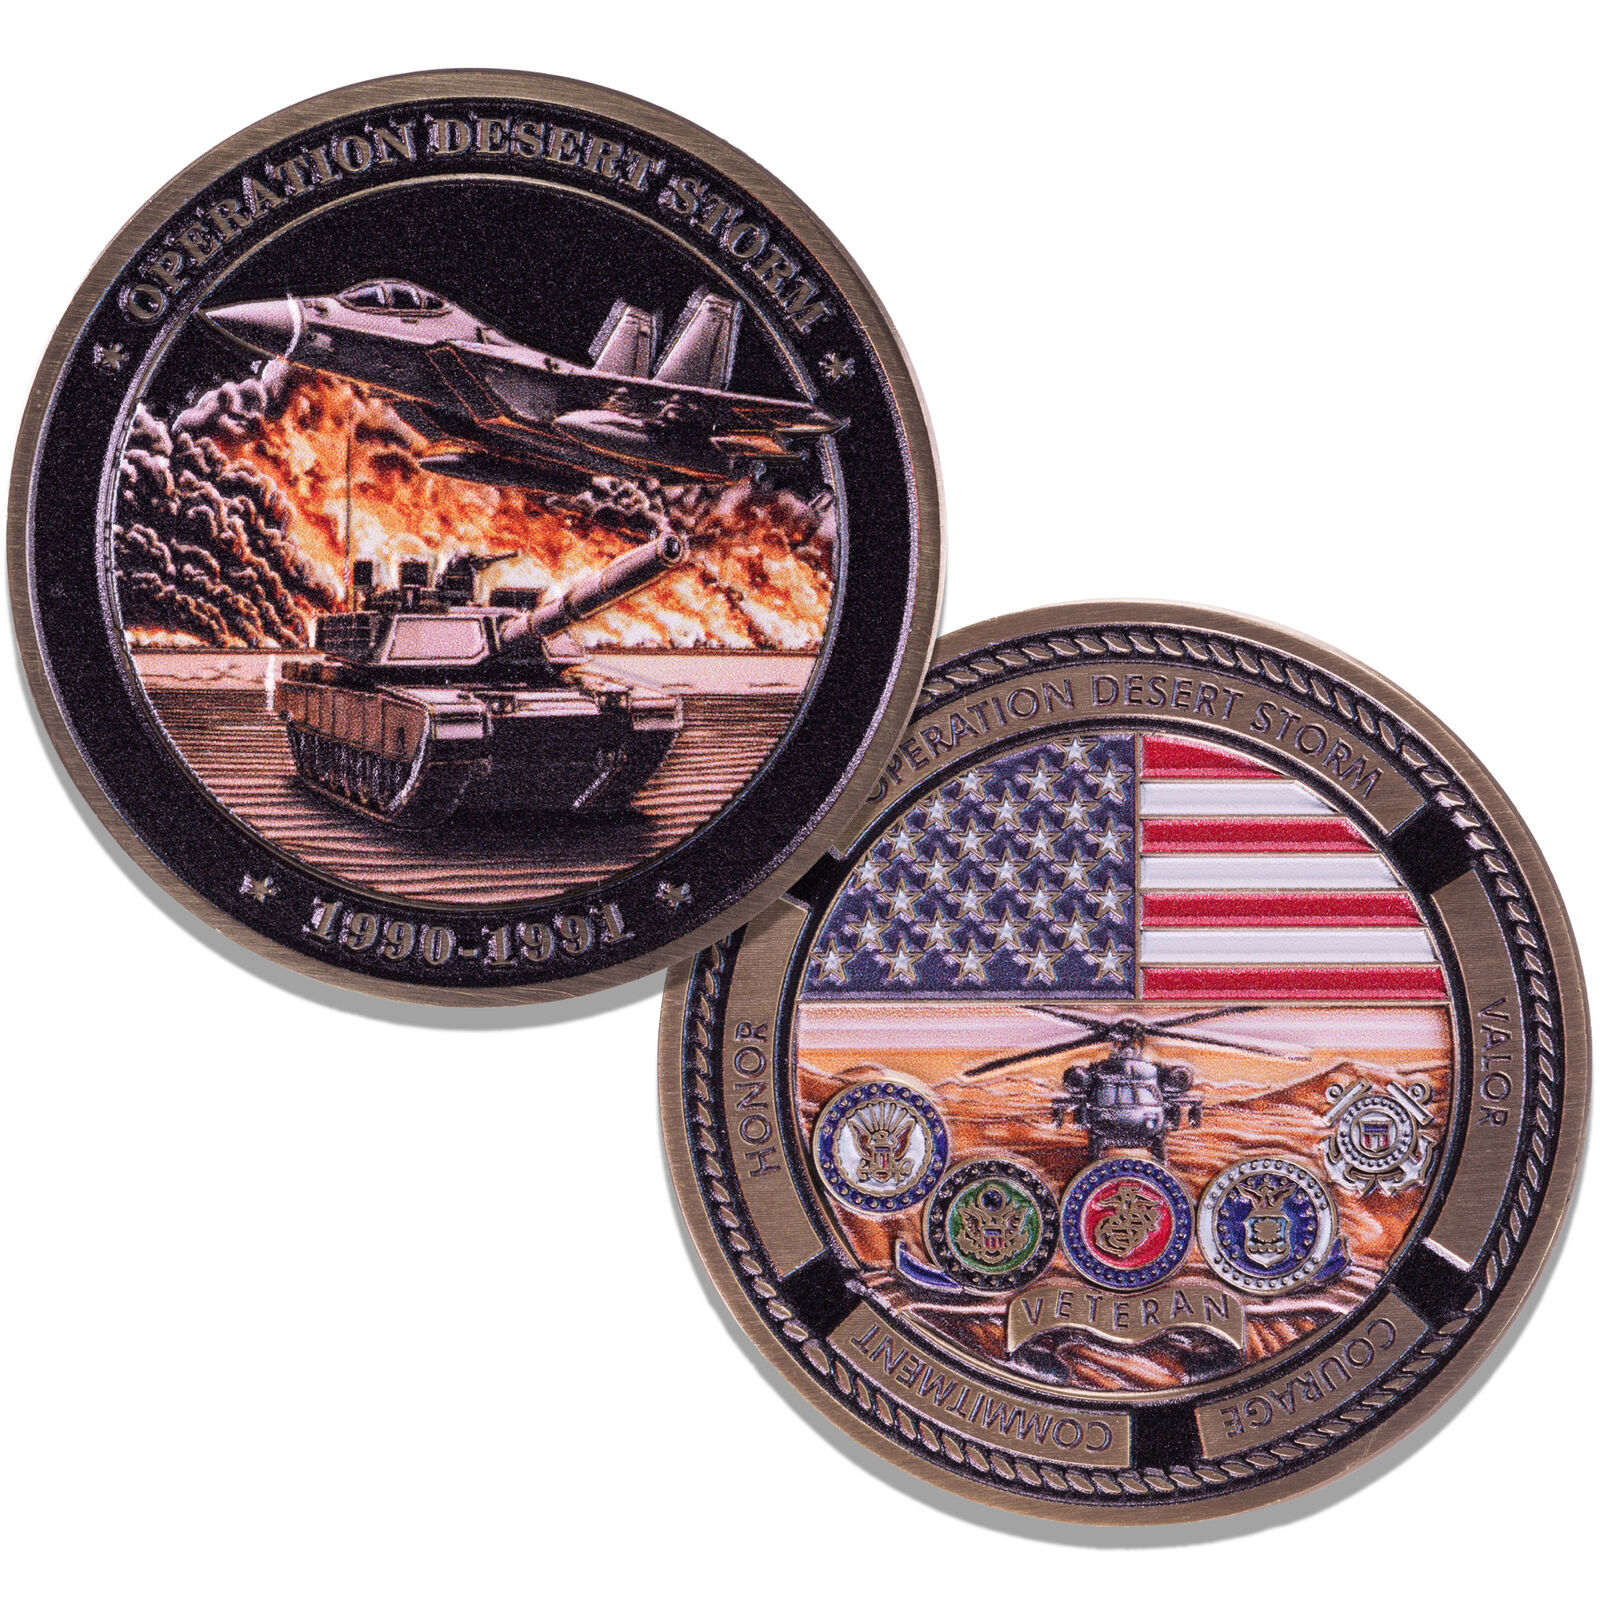 Operation Desert Storm Coin